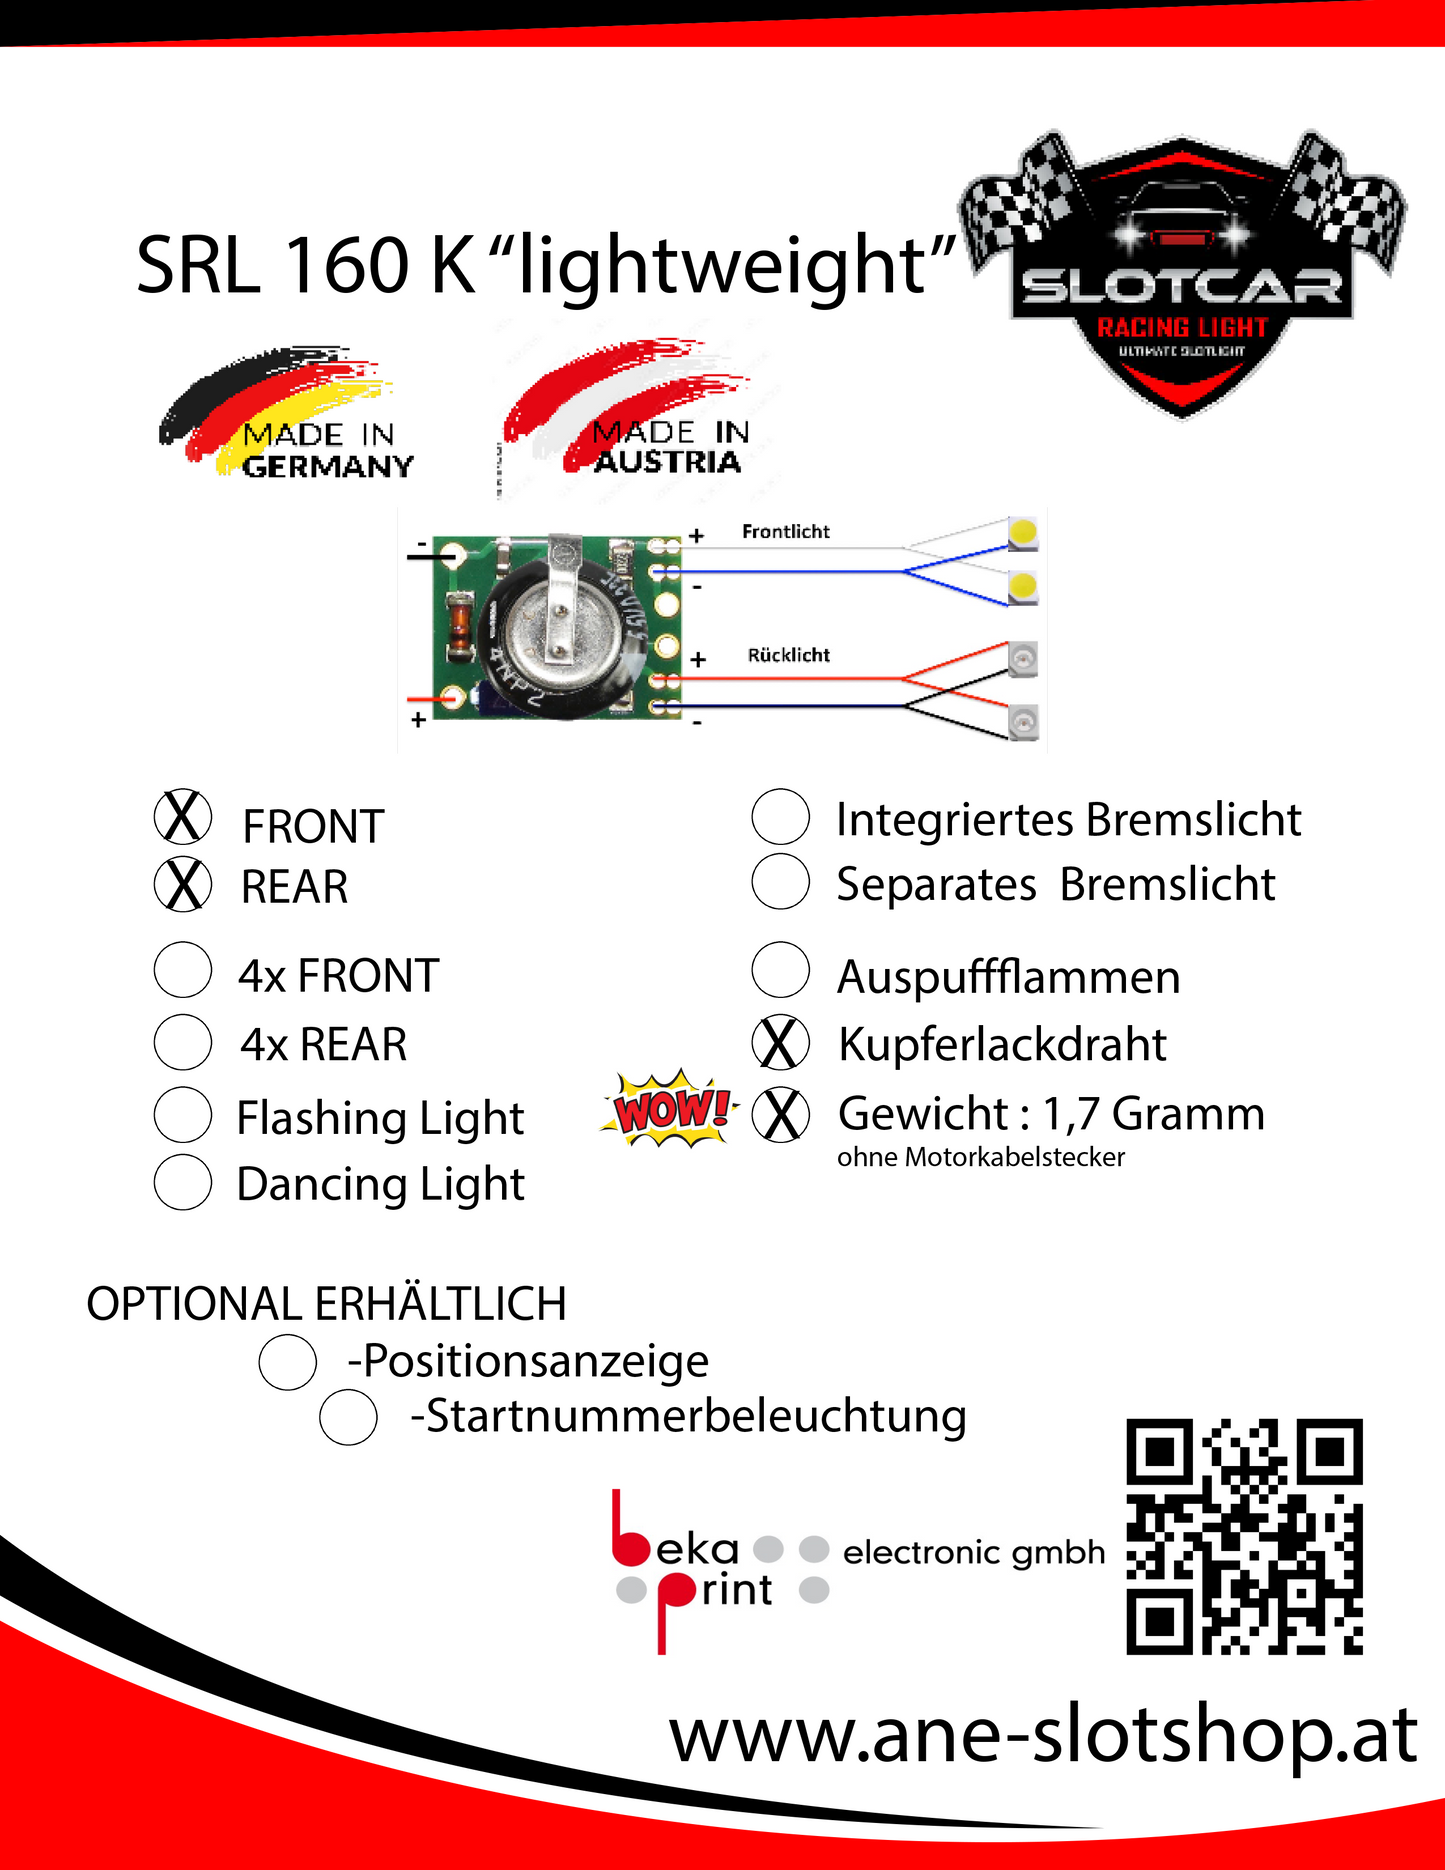 SRL-160 K "lightweight" Classic